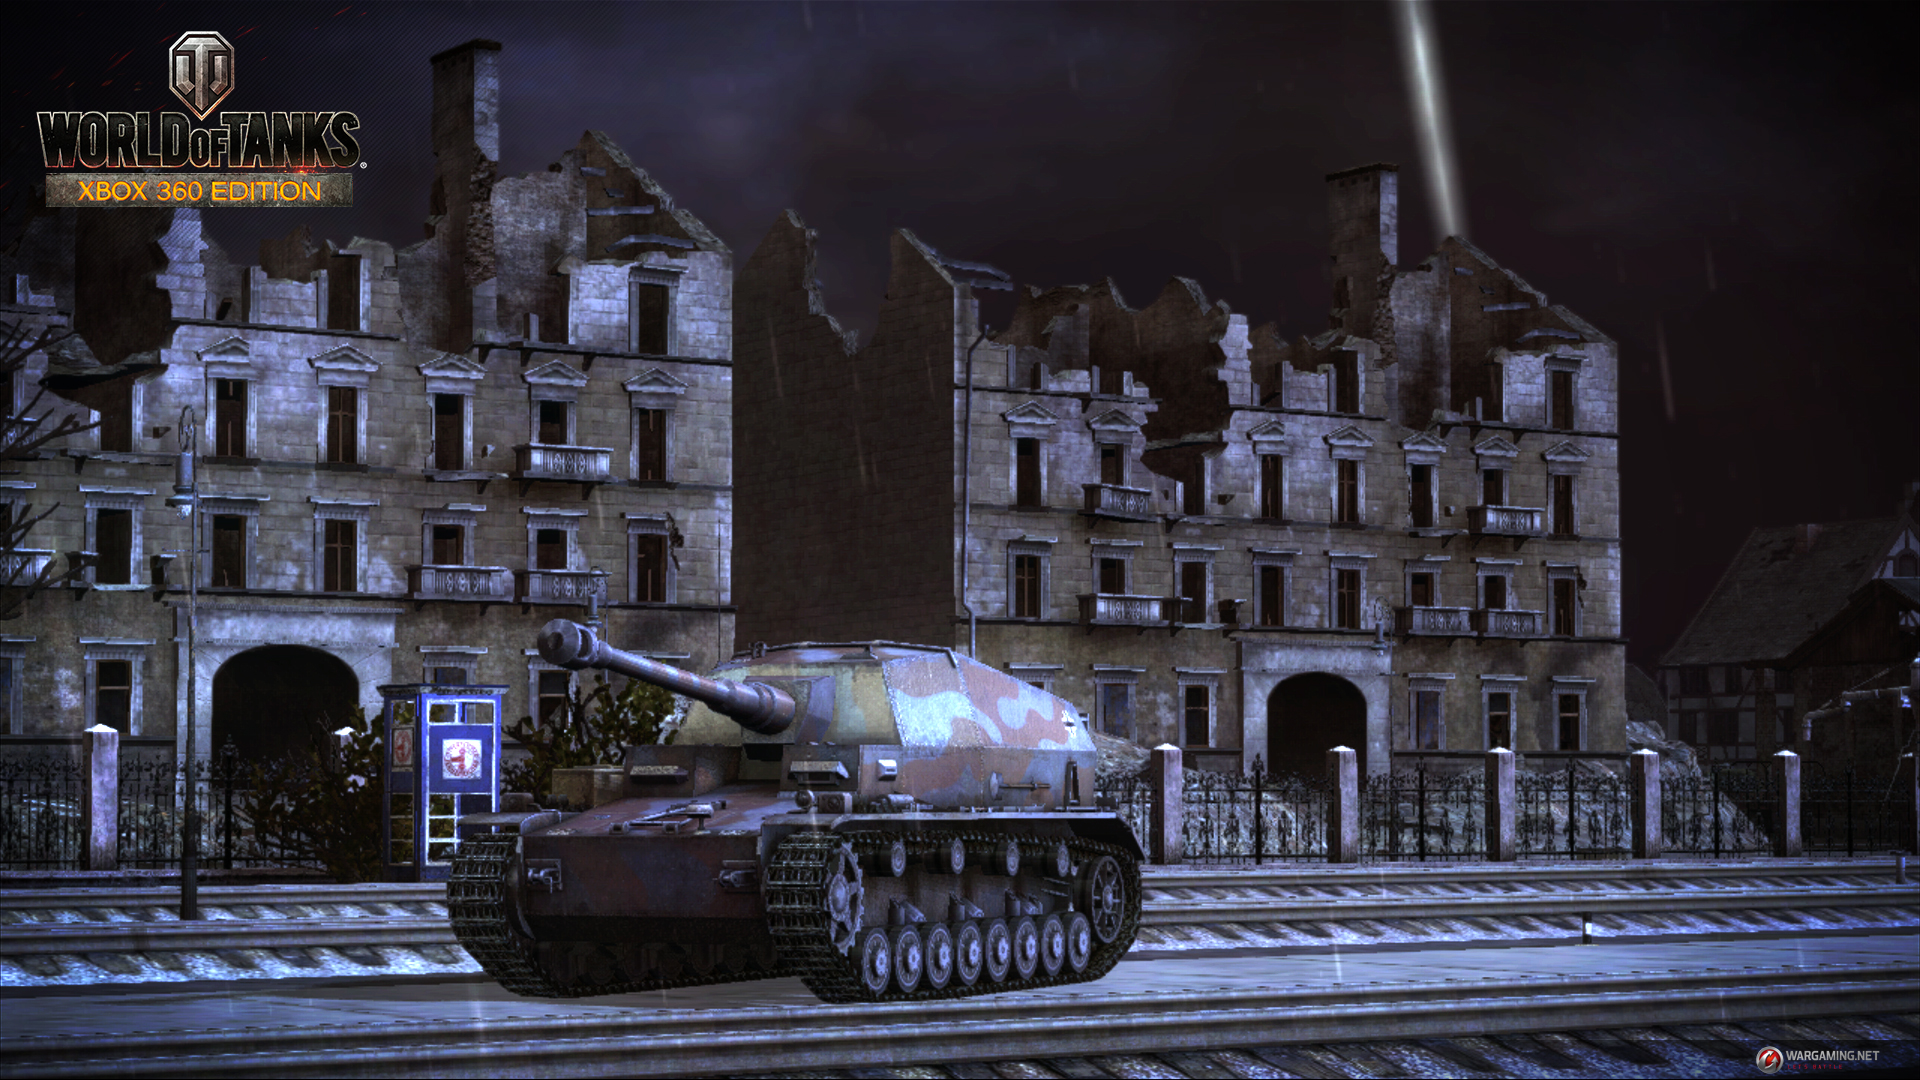 World of tanks 360. World of Tanks Xbox 360. Ворлд оф танк на Xbox 360. World of Tanks: Xbox 360 Edition. Танки на хбокс 360.